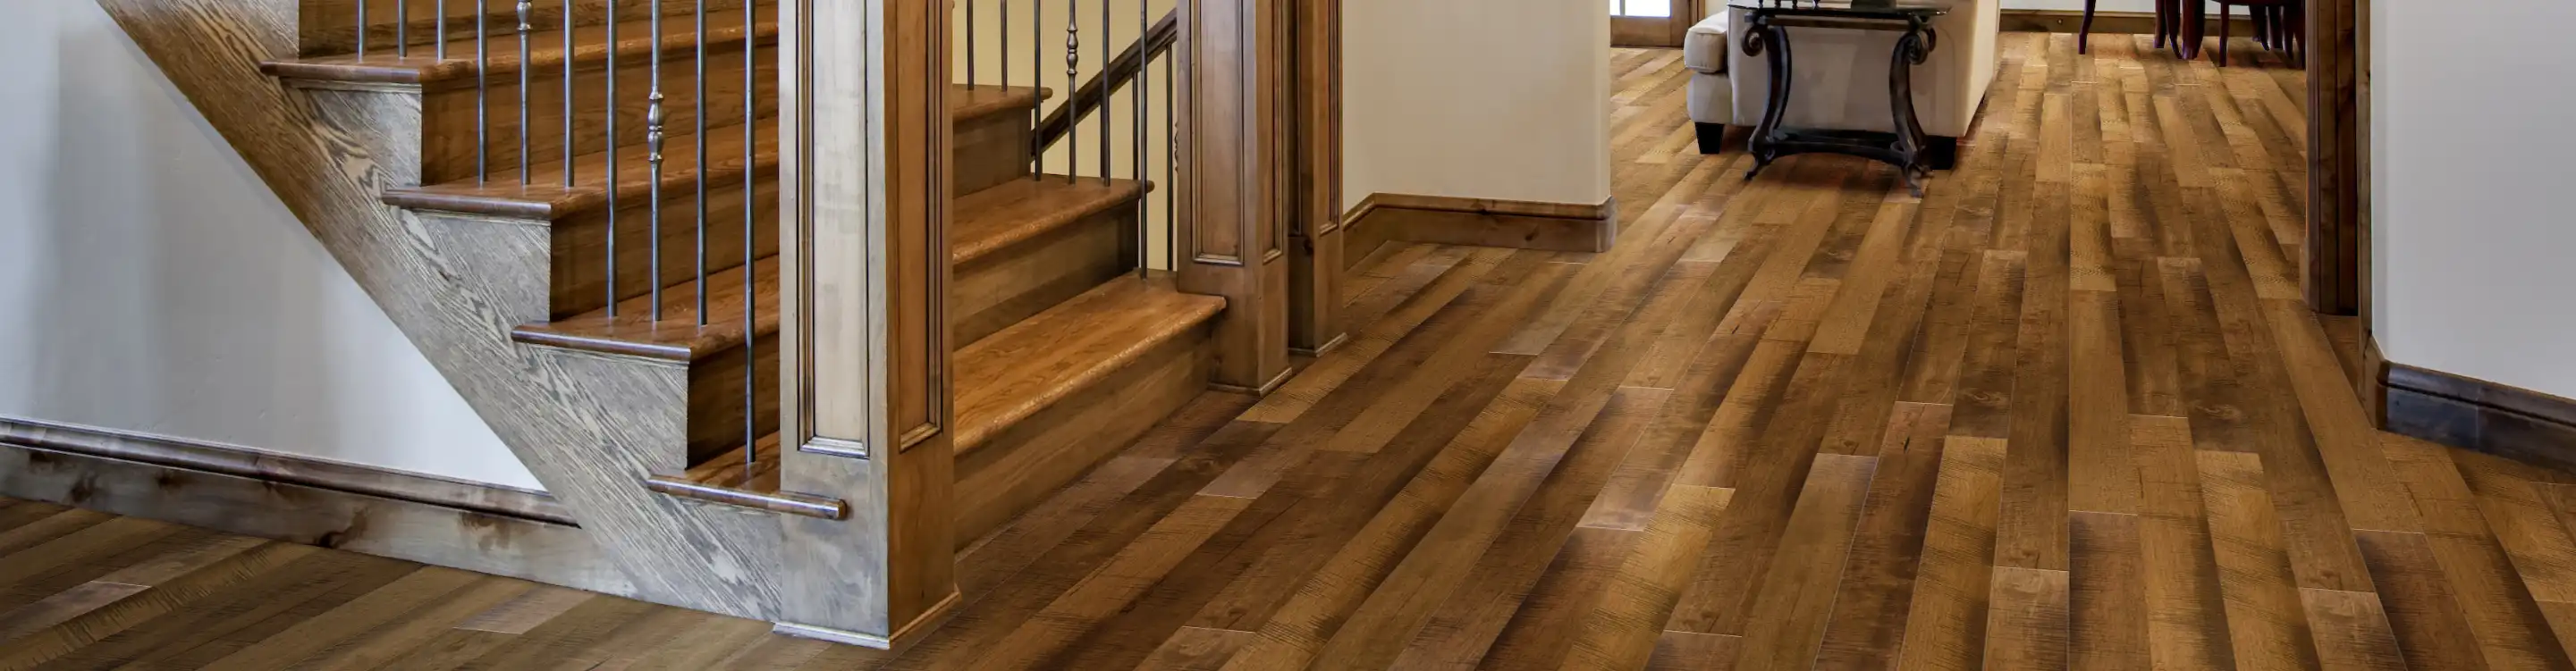 Hardwood floors near stairs 